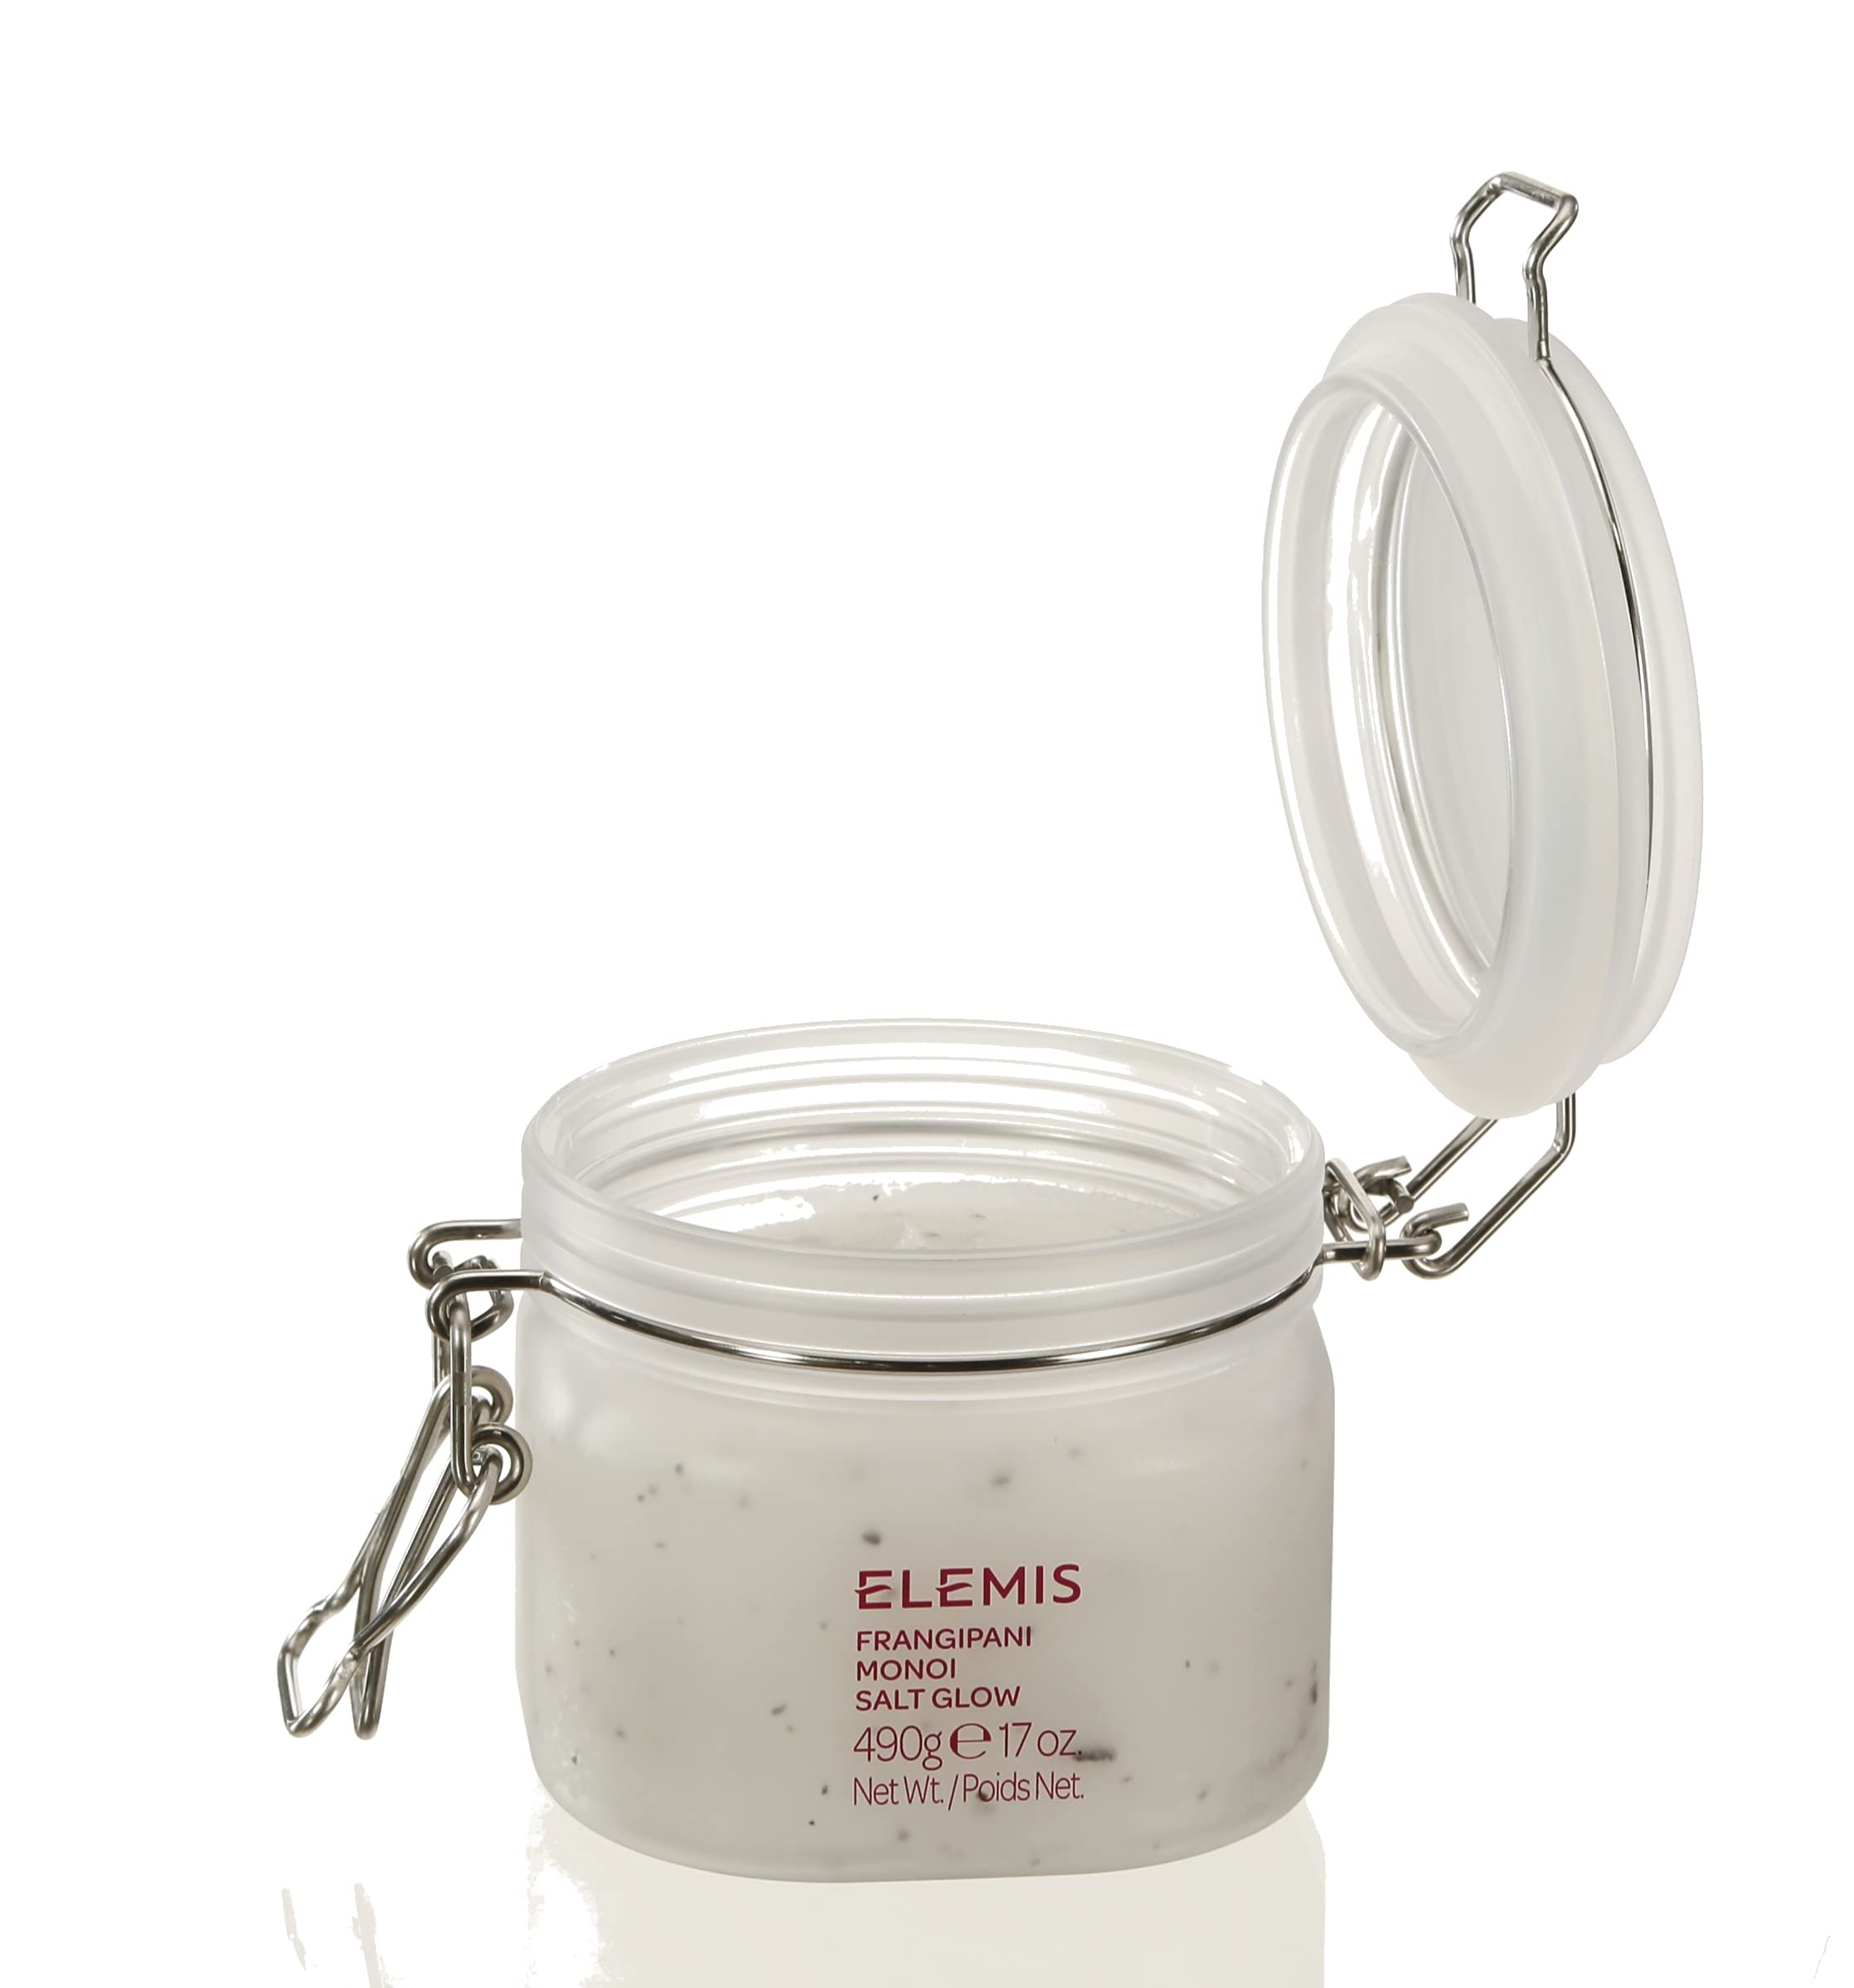 ELEMIS Frangipani Monoi Salt Glow | Luxurious Tropical Salt Scrub Helps to Lock in Moisture and Exfoliates, Smoothes, and Softens the Skin | 490g